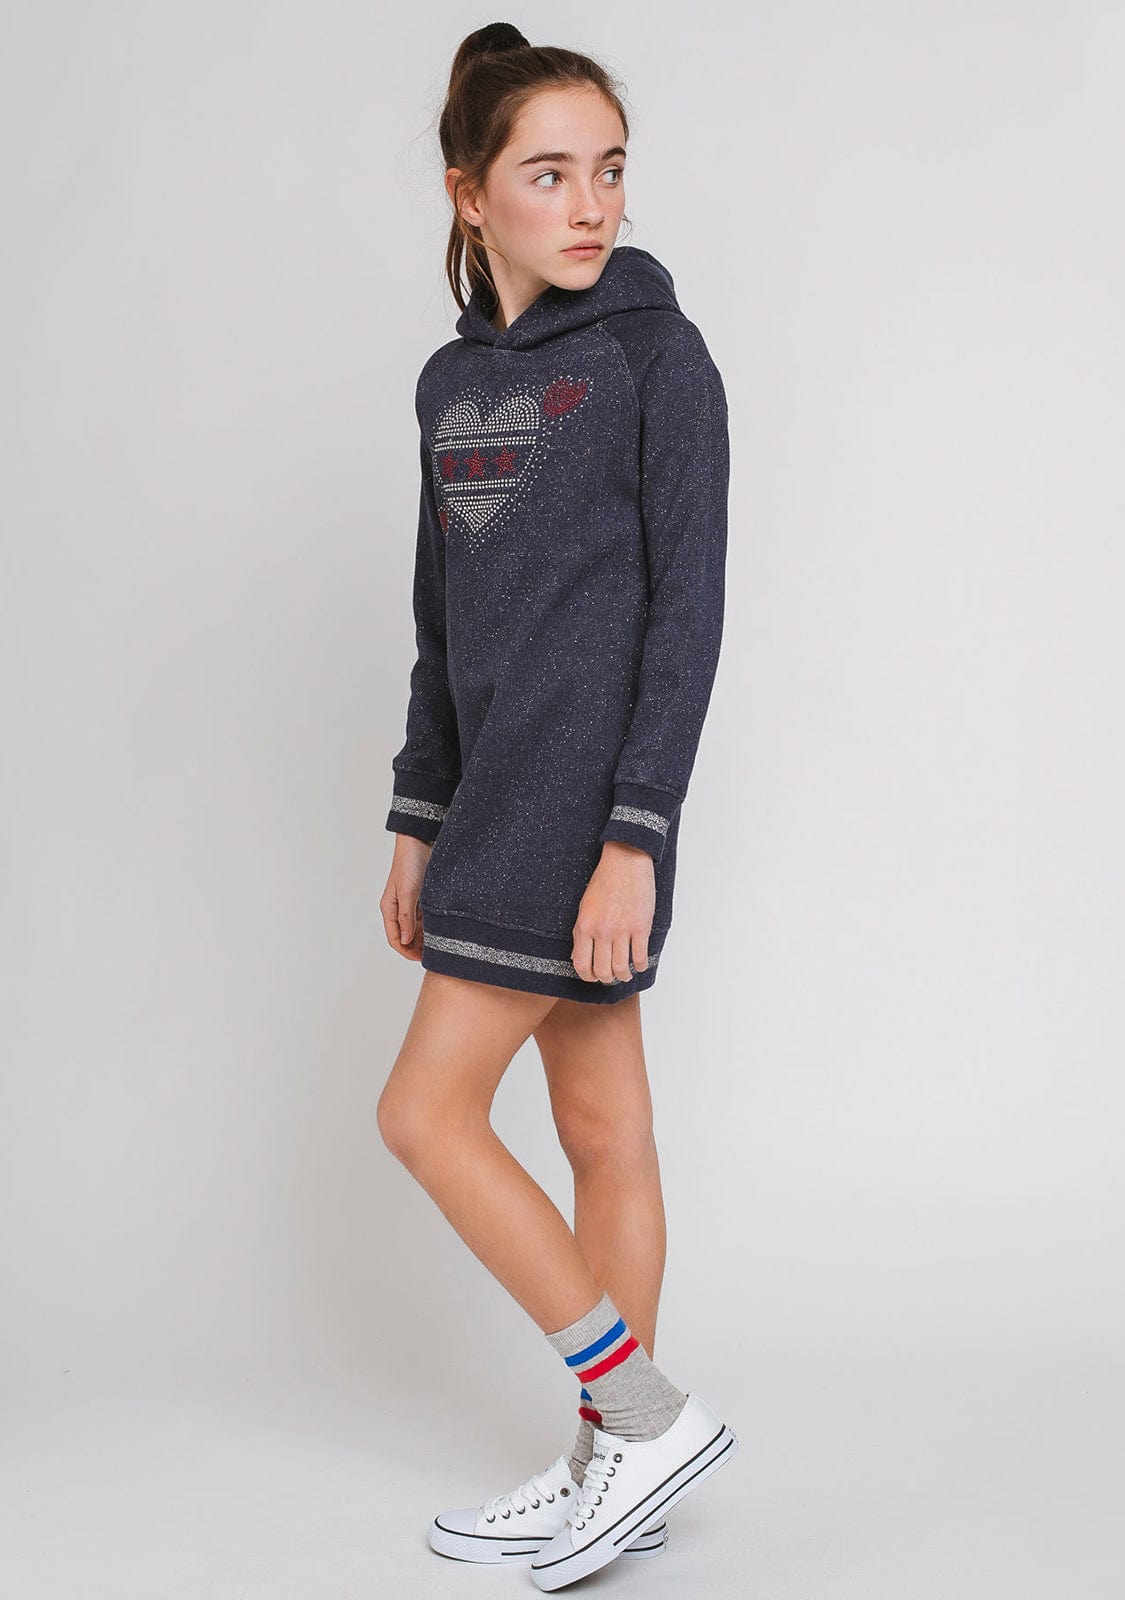 CONGUITOS TEXTIL Clothing Girl's Navy Sweatshirt-Dress